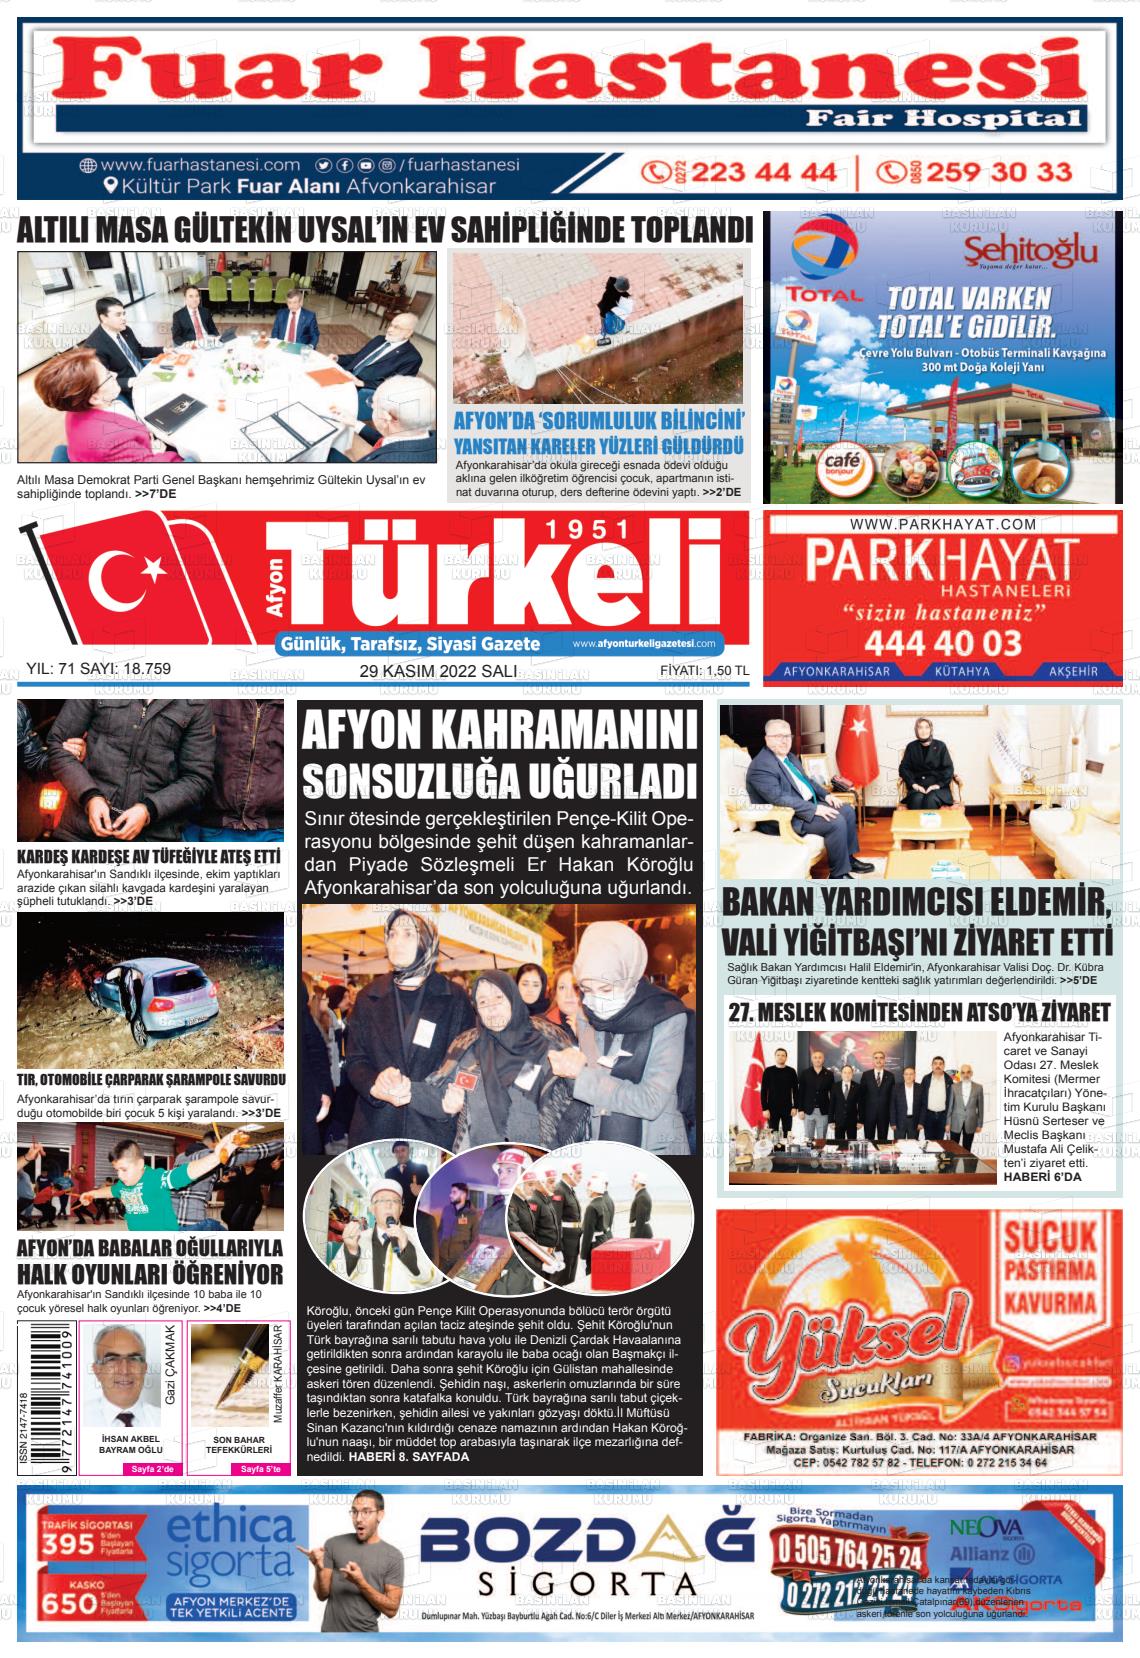 29 Kasım 2022 Afyon Türkeli Gazete Manşeti